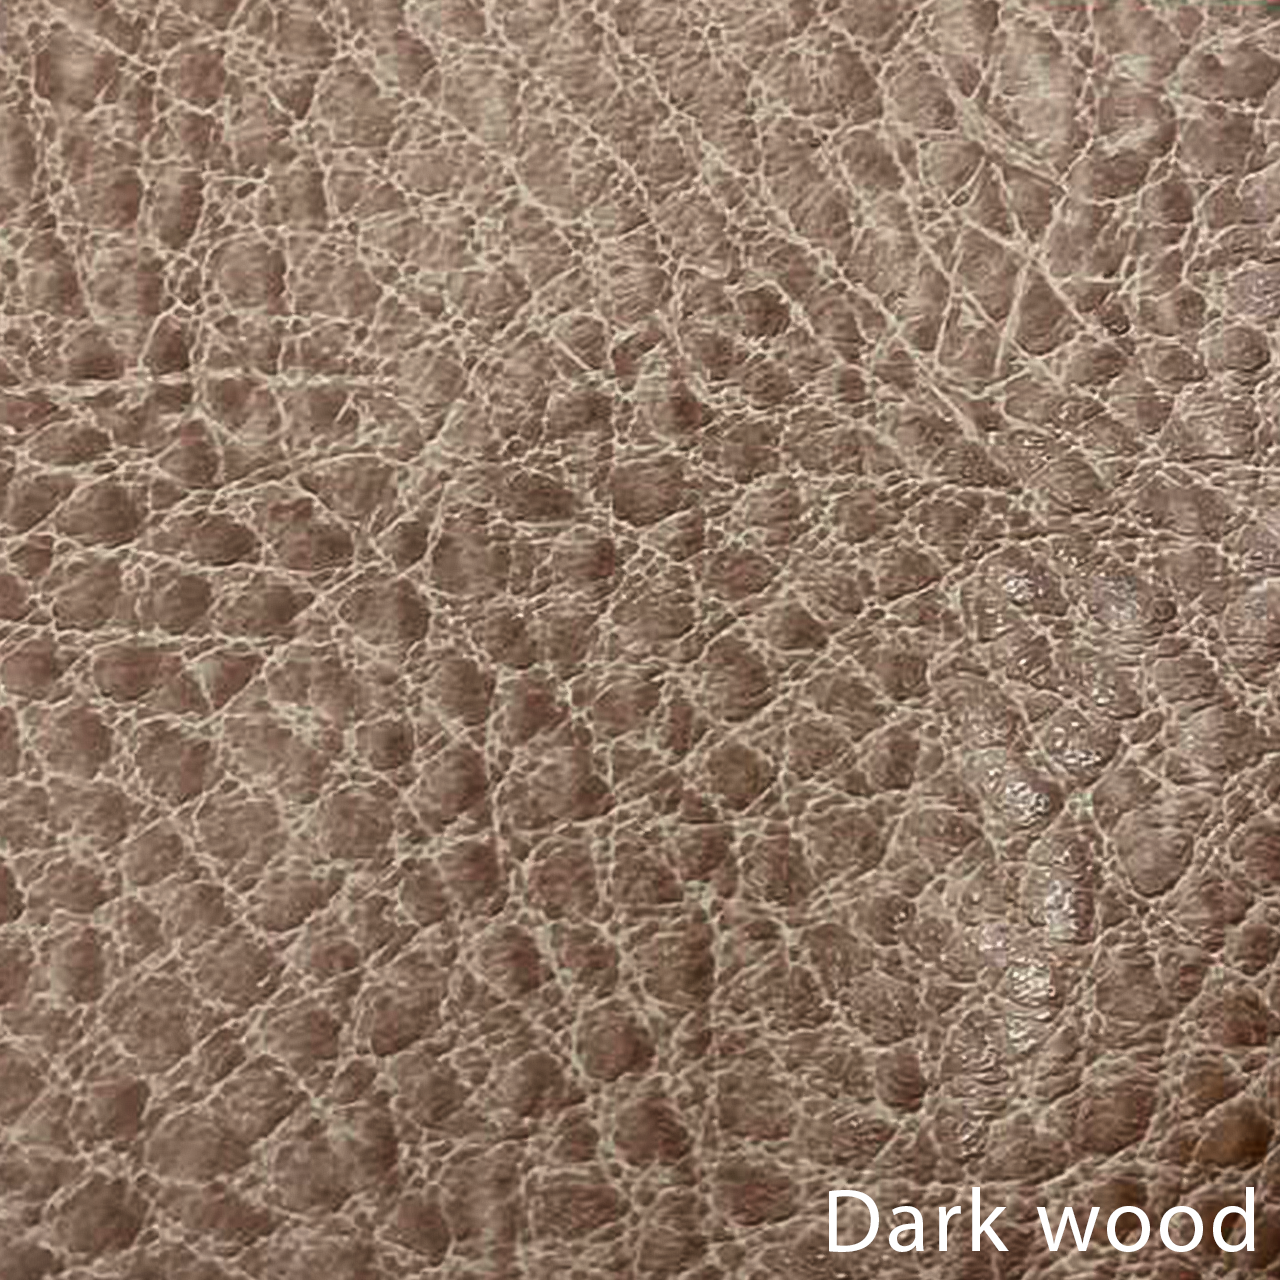 Dark wood